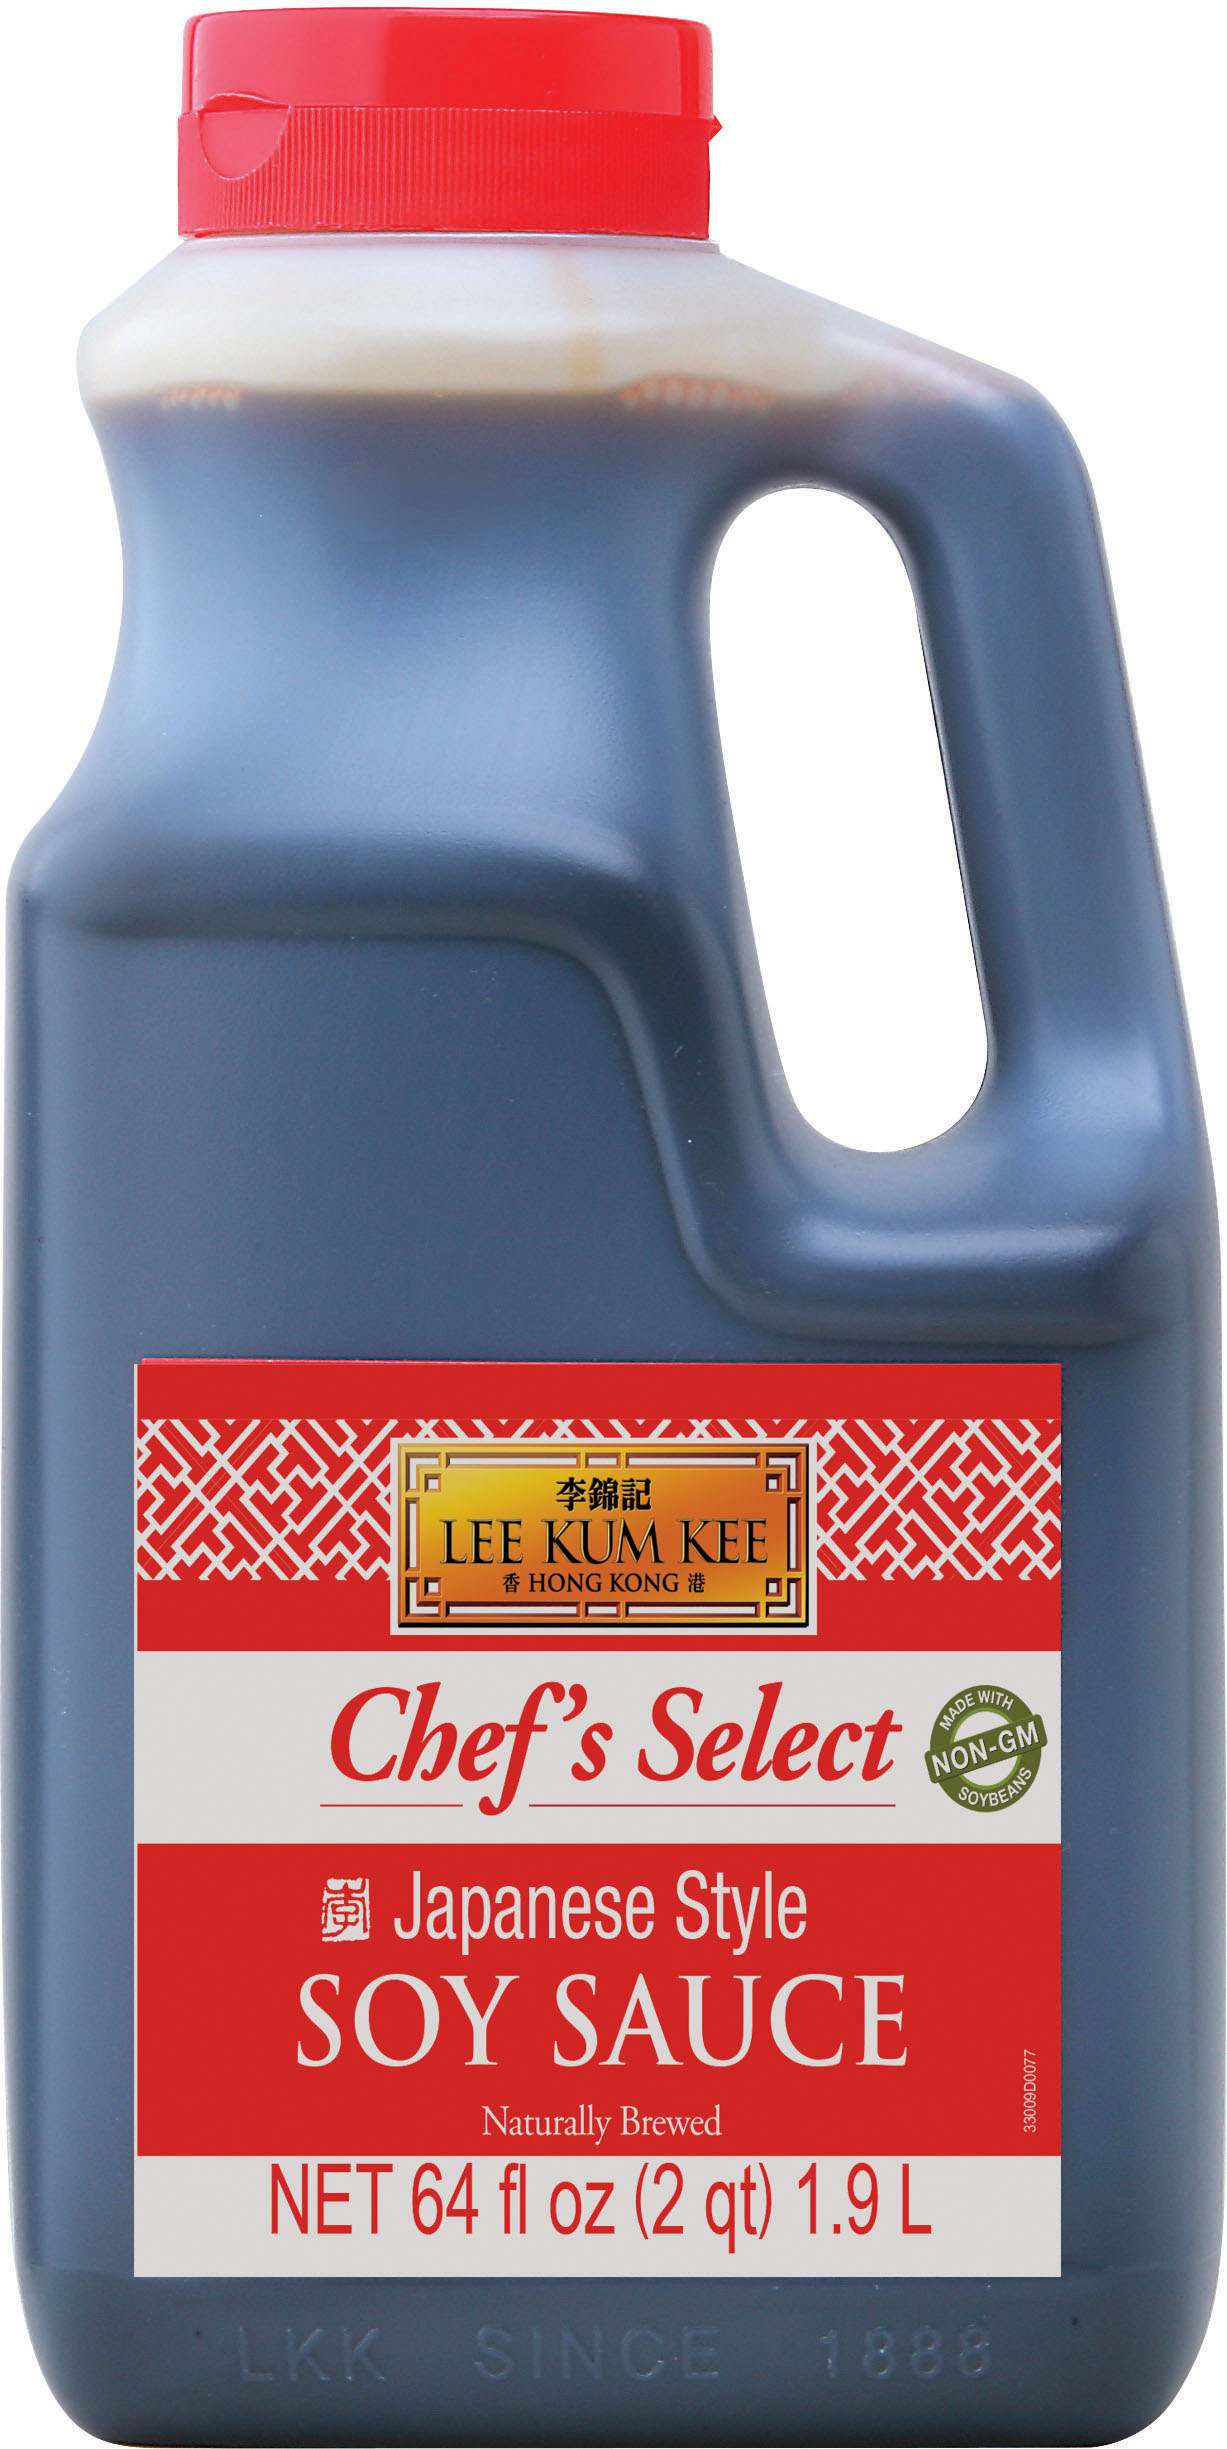 Chefs Select Soy Sauce 64 fl oz, 1.9L